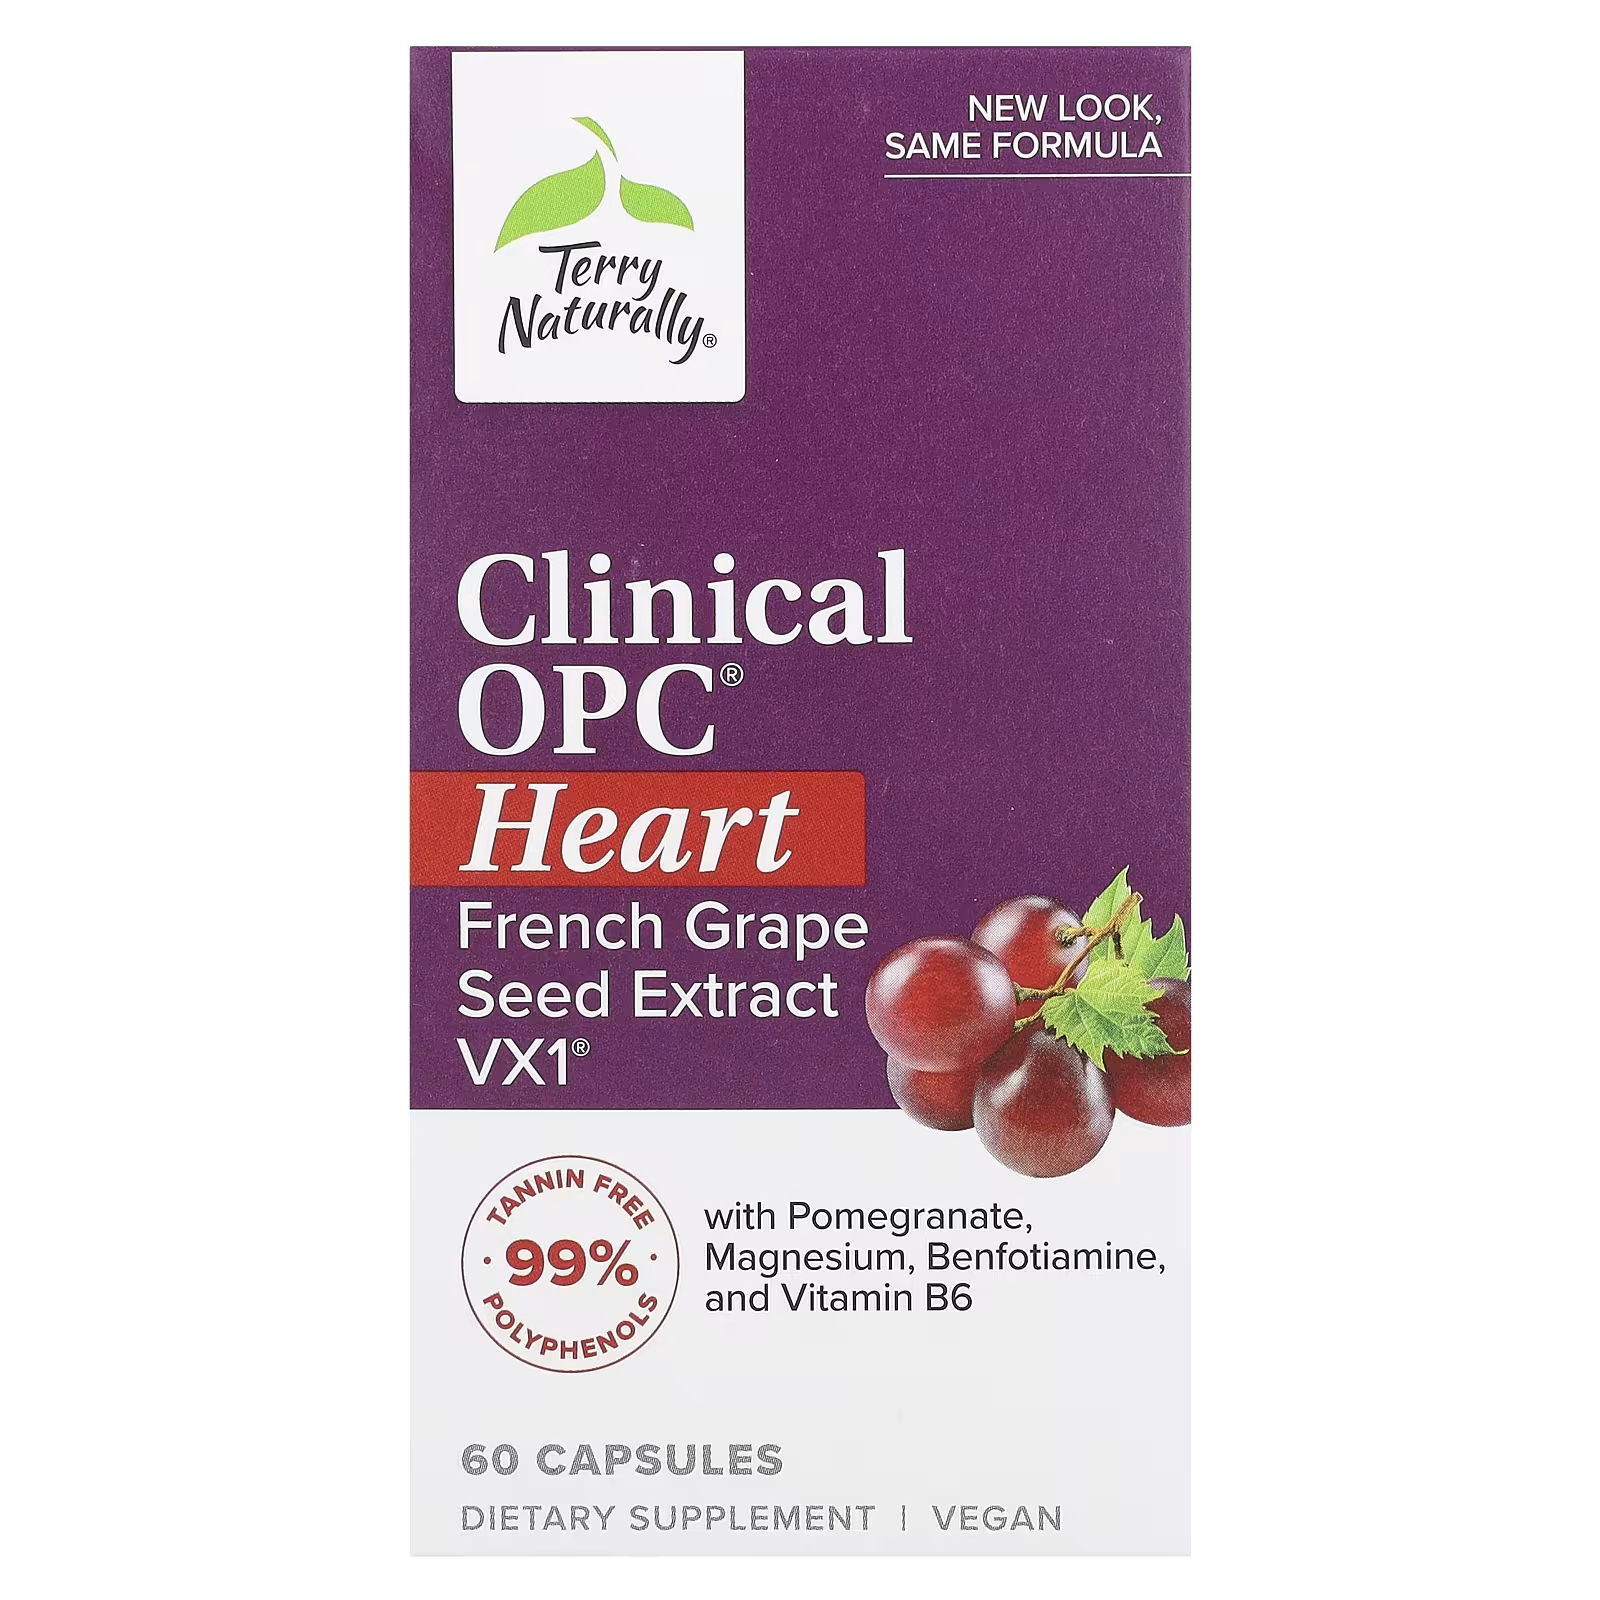 Пищевая добавка Terry Naturally Clinical OPC Heart для сердечно-сосудистой системы, 60 капсул фотобарабан elp elp opc h1505hq elp opc h1505hq